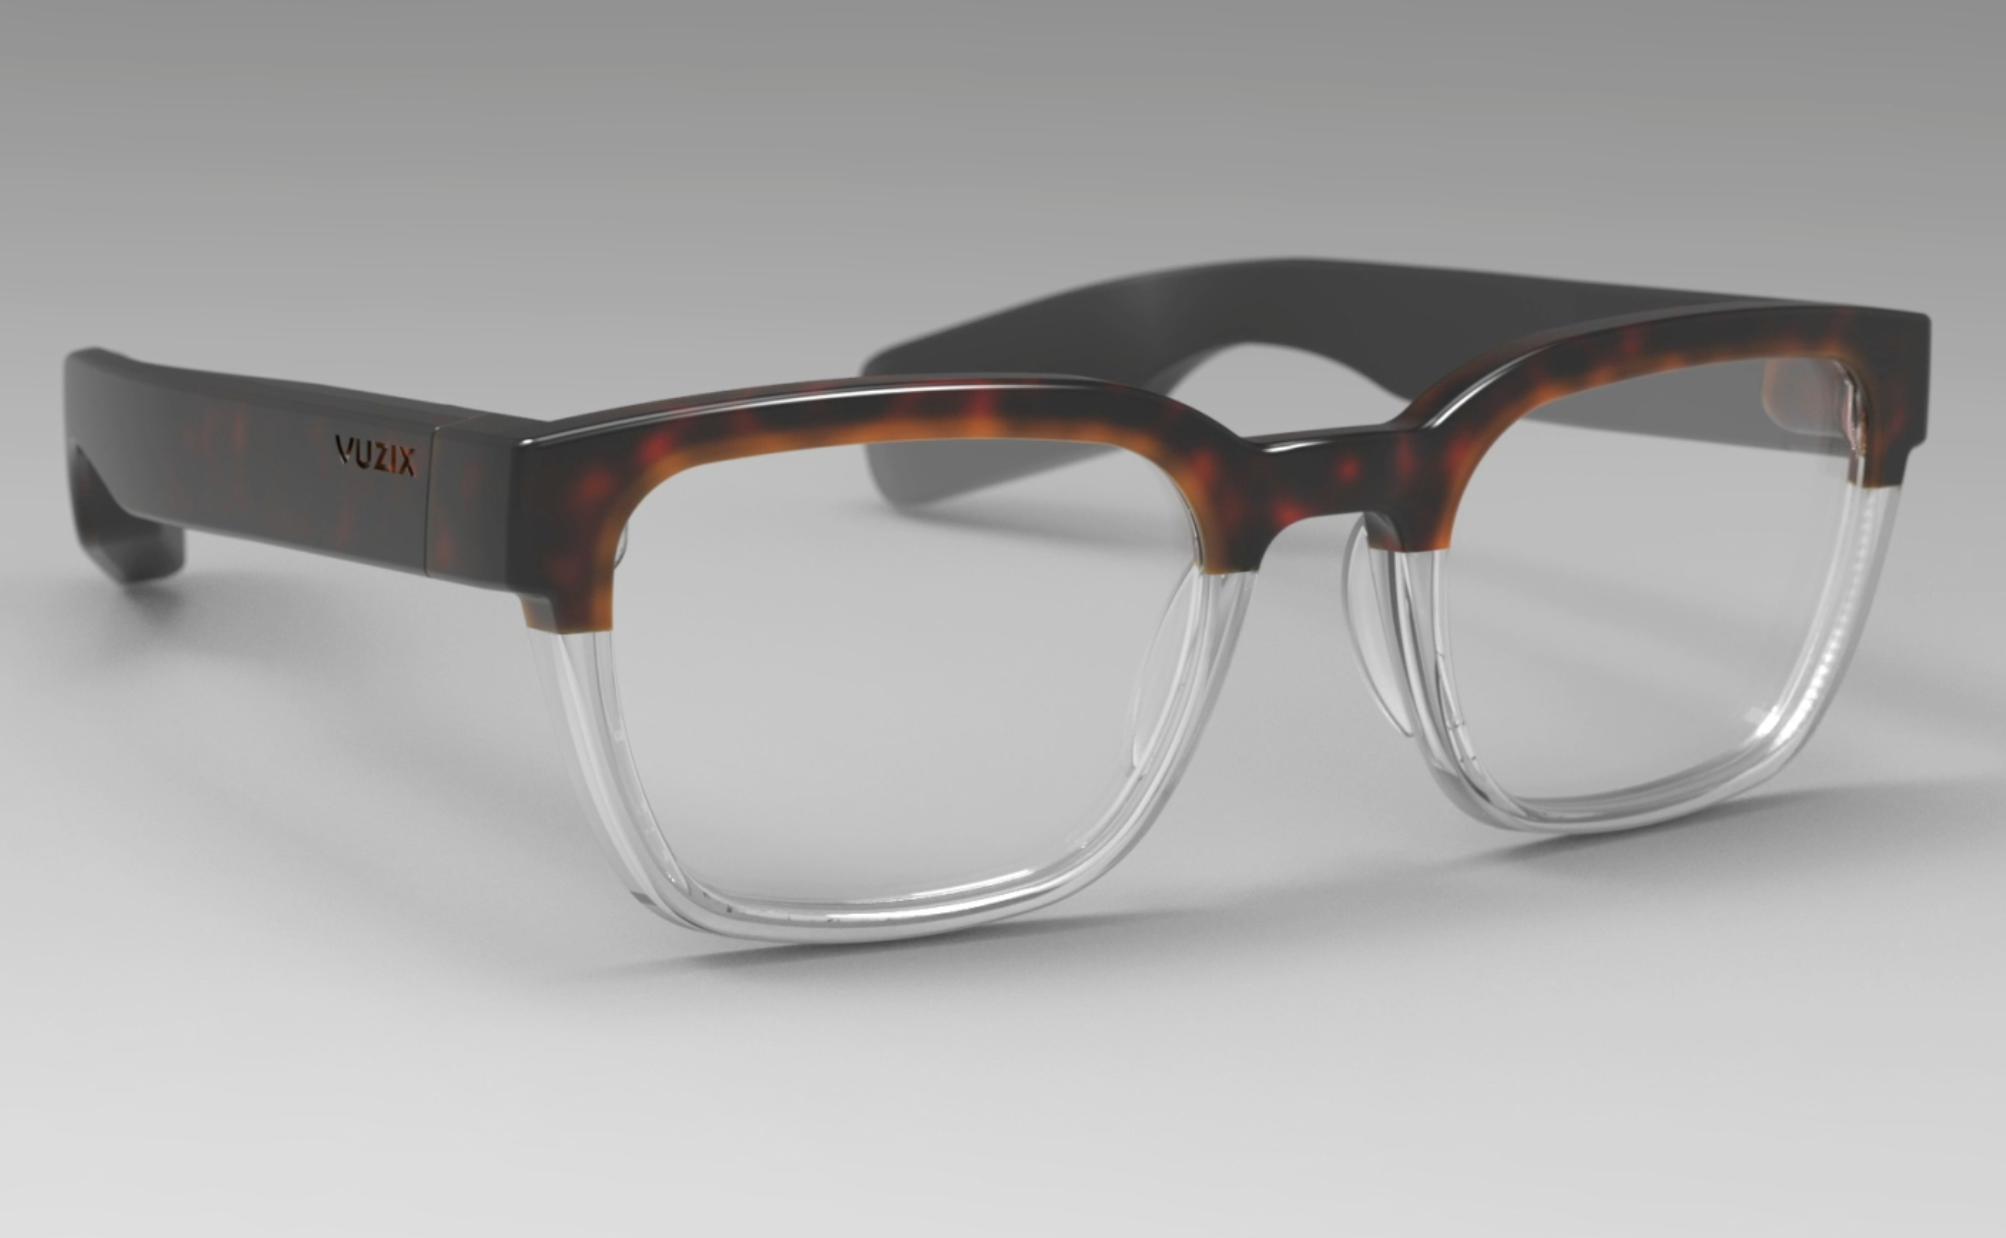 New Vuzix smart glasses use microLED technology​